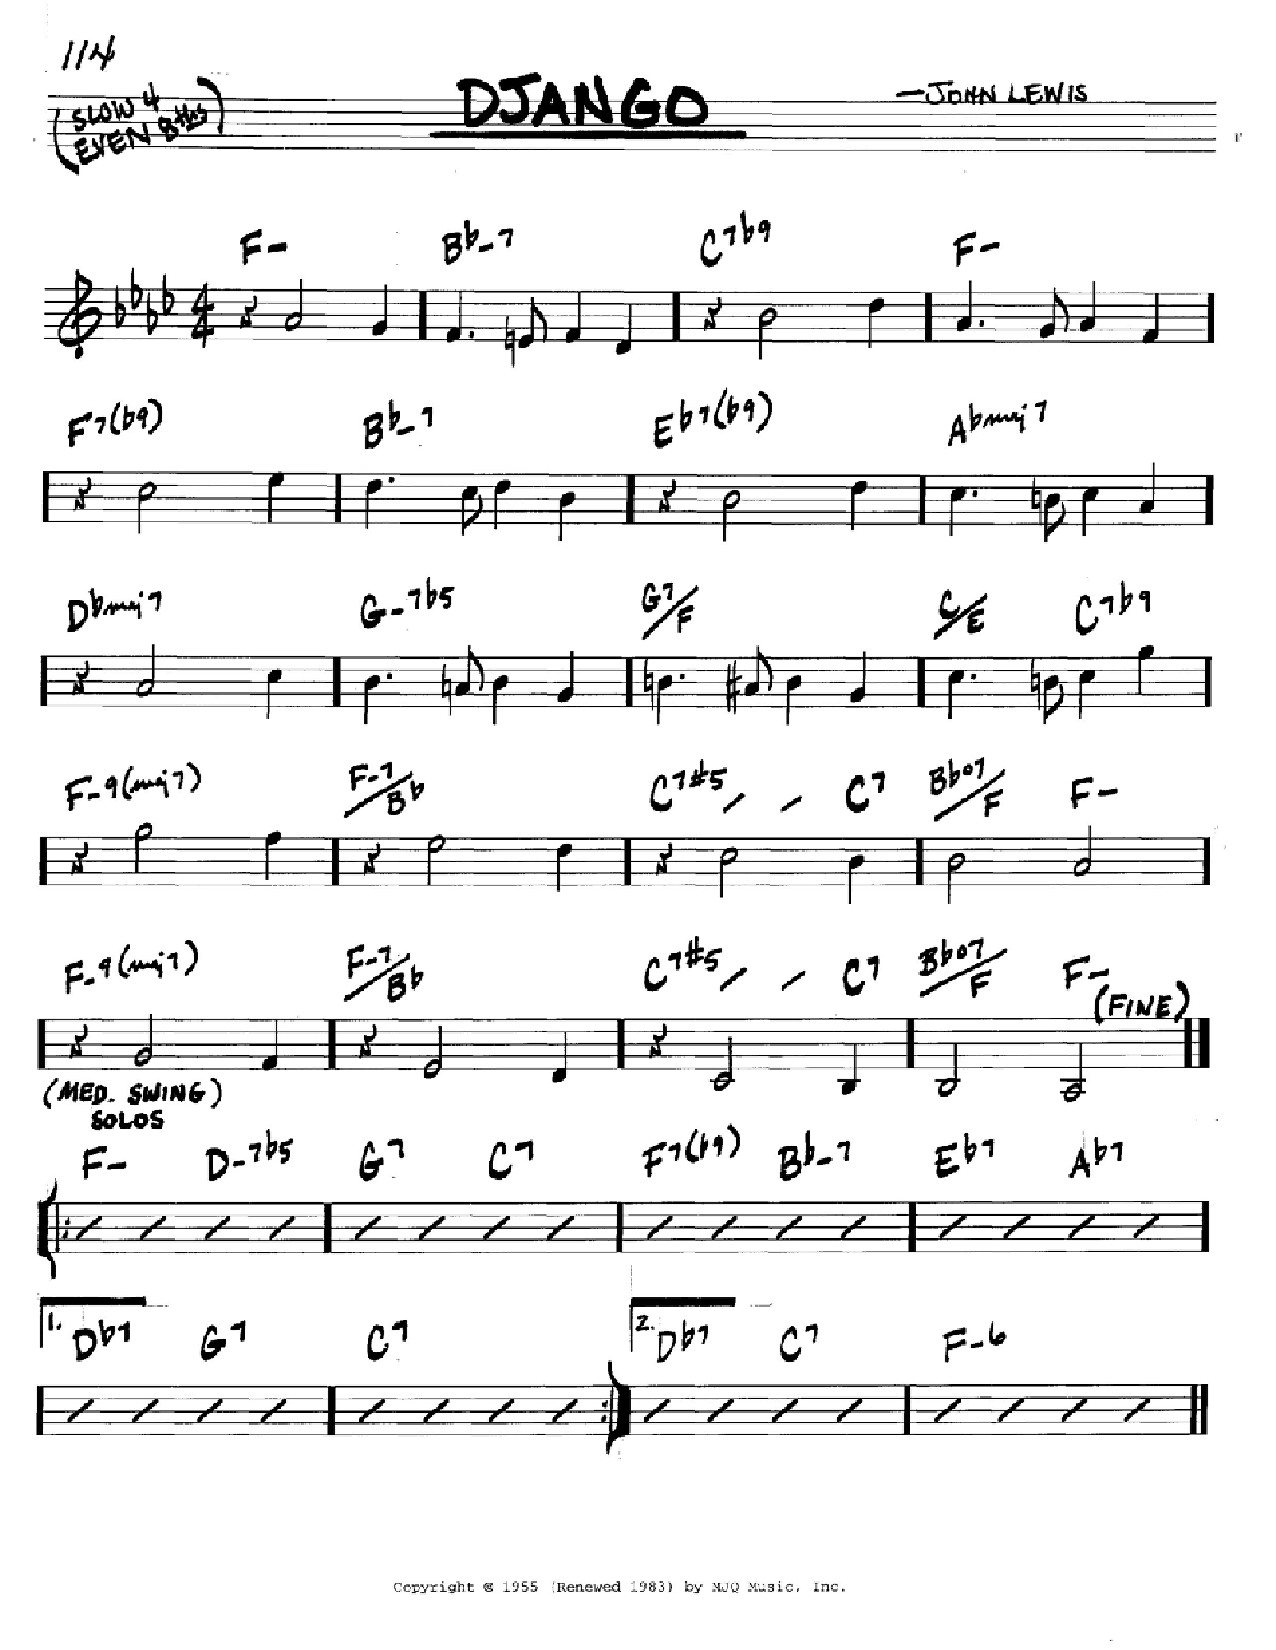 John Lewis Django Sheet Music Notes & Chords for Real Book – Melody & Chords – Bb Instruments - Download or Print PDF